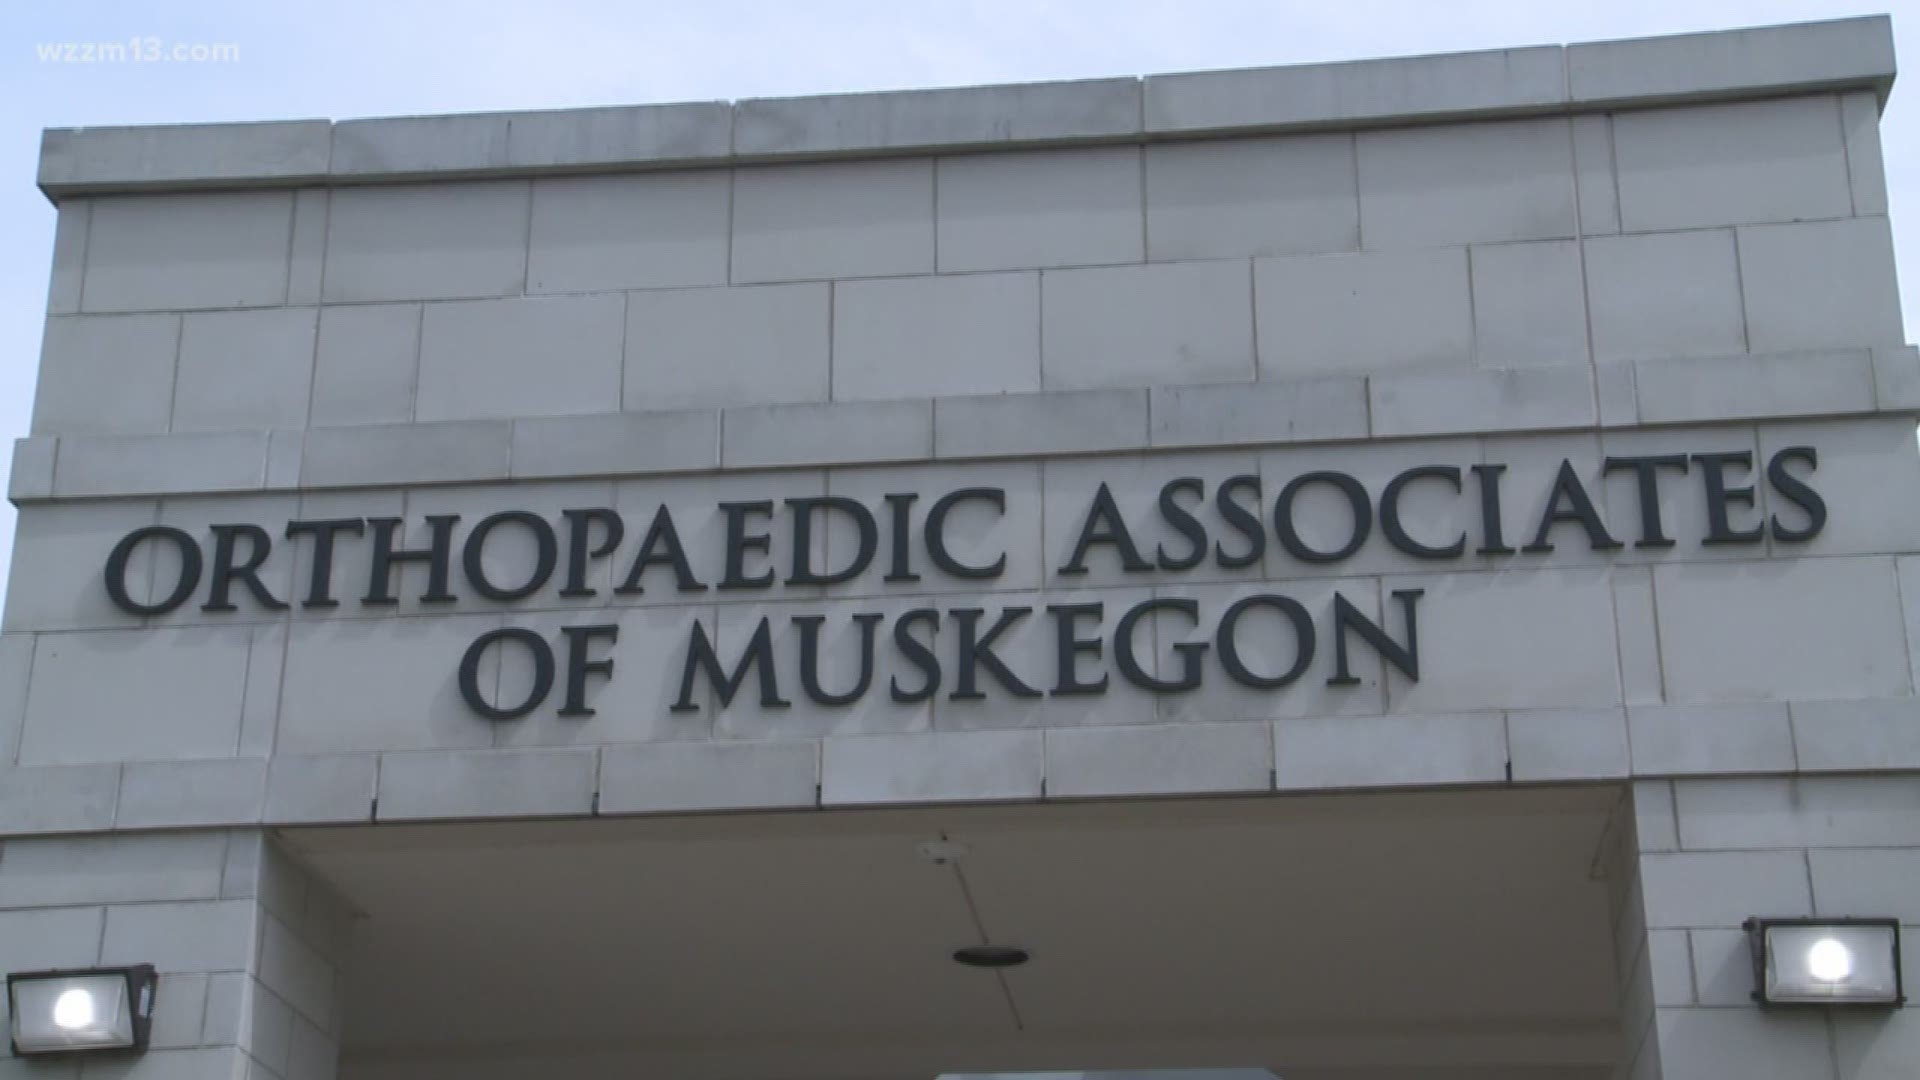 Orthopaedic Associates of Muskegon